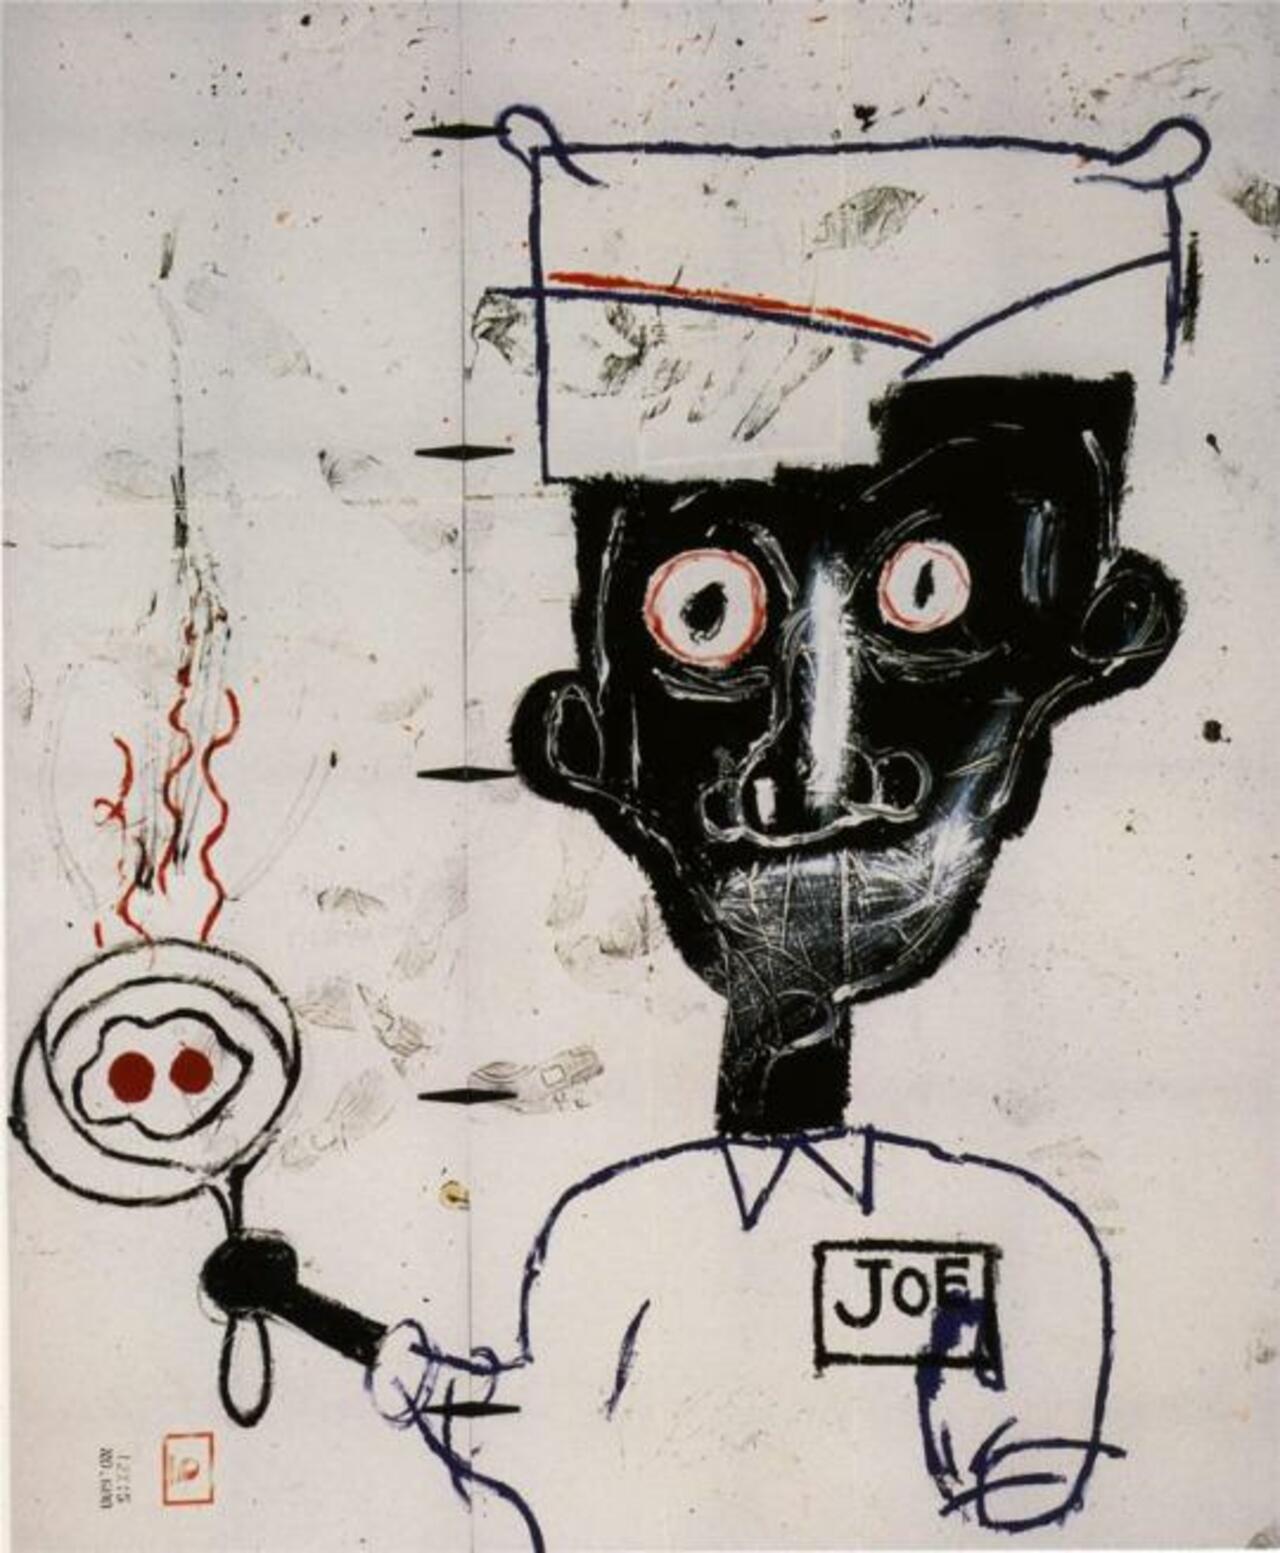 RT @CamilleStein: Jean-Michel Basquiat / 'Eyes & Eggs' - http://t.co/6Y8Rrn9aKG / via @Mr_Mustard @marioandreolini